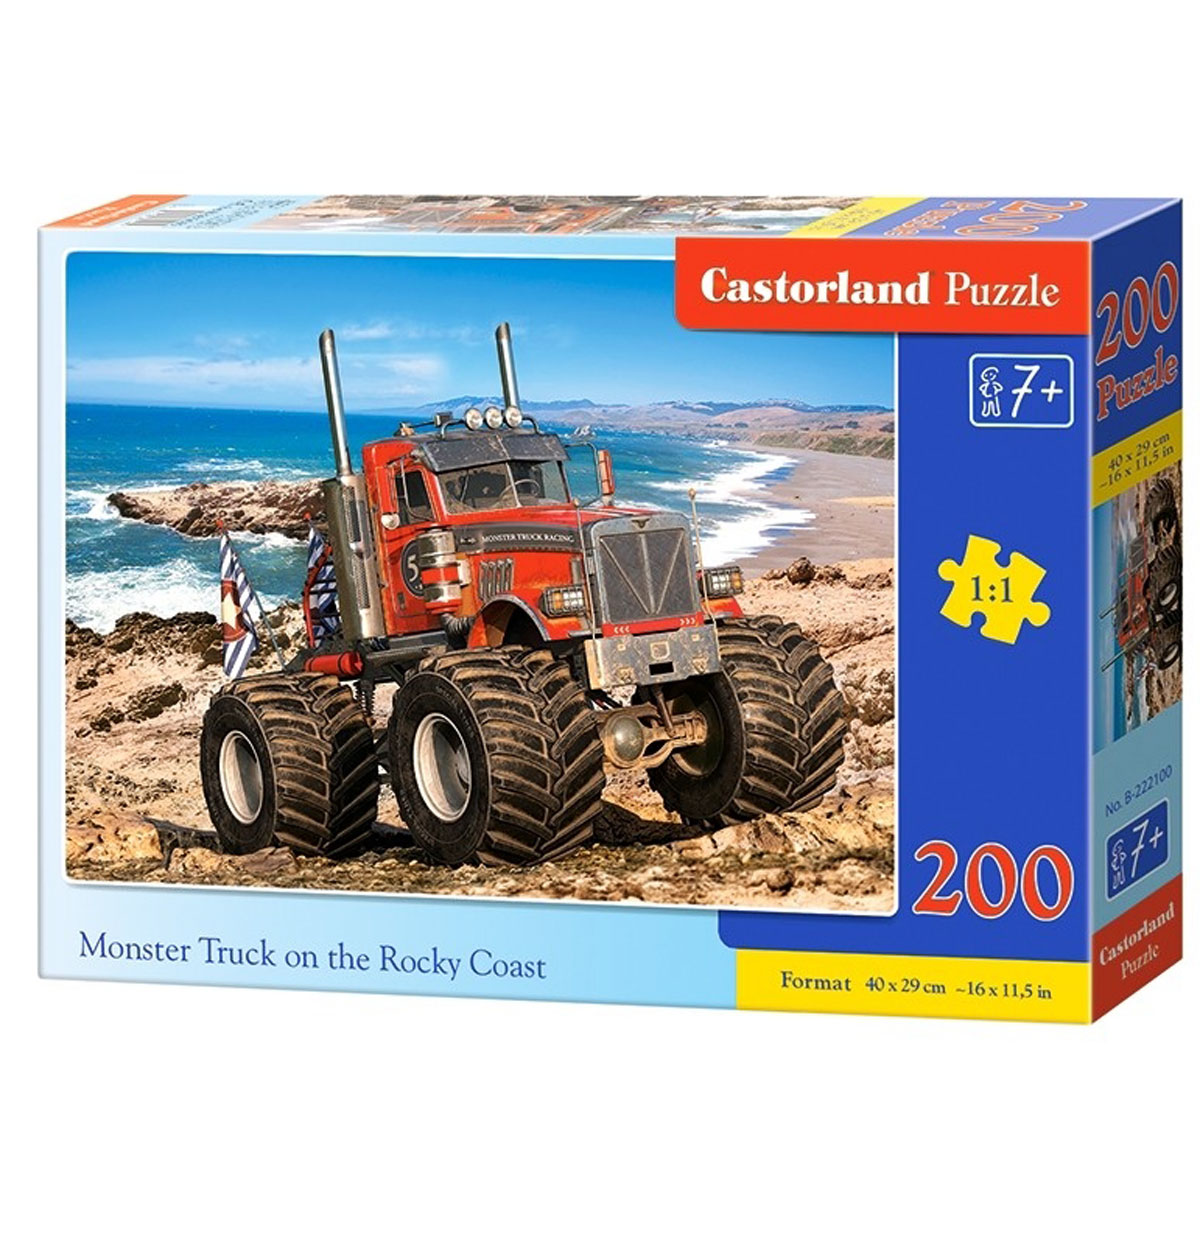 Пазлы 200. Puzzle Castorland Monster Truck. Castorland Puzzle 200. Пазл 200 деталей.